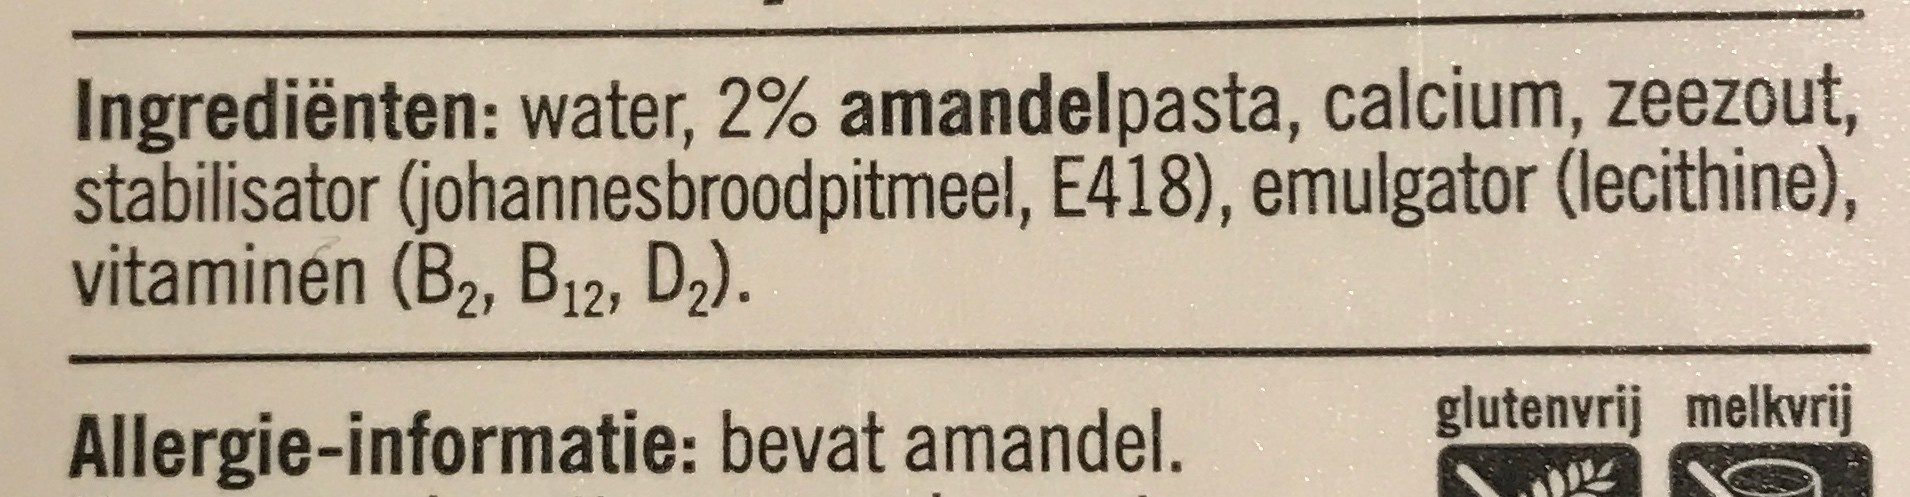 Amandel drink - ongezoet - Ingrédients